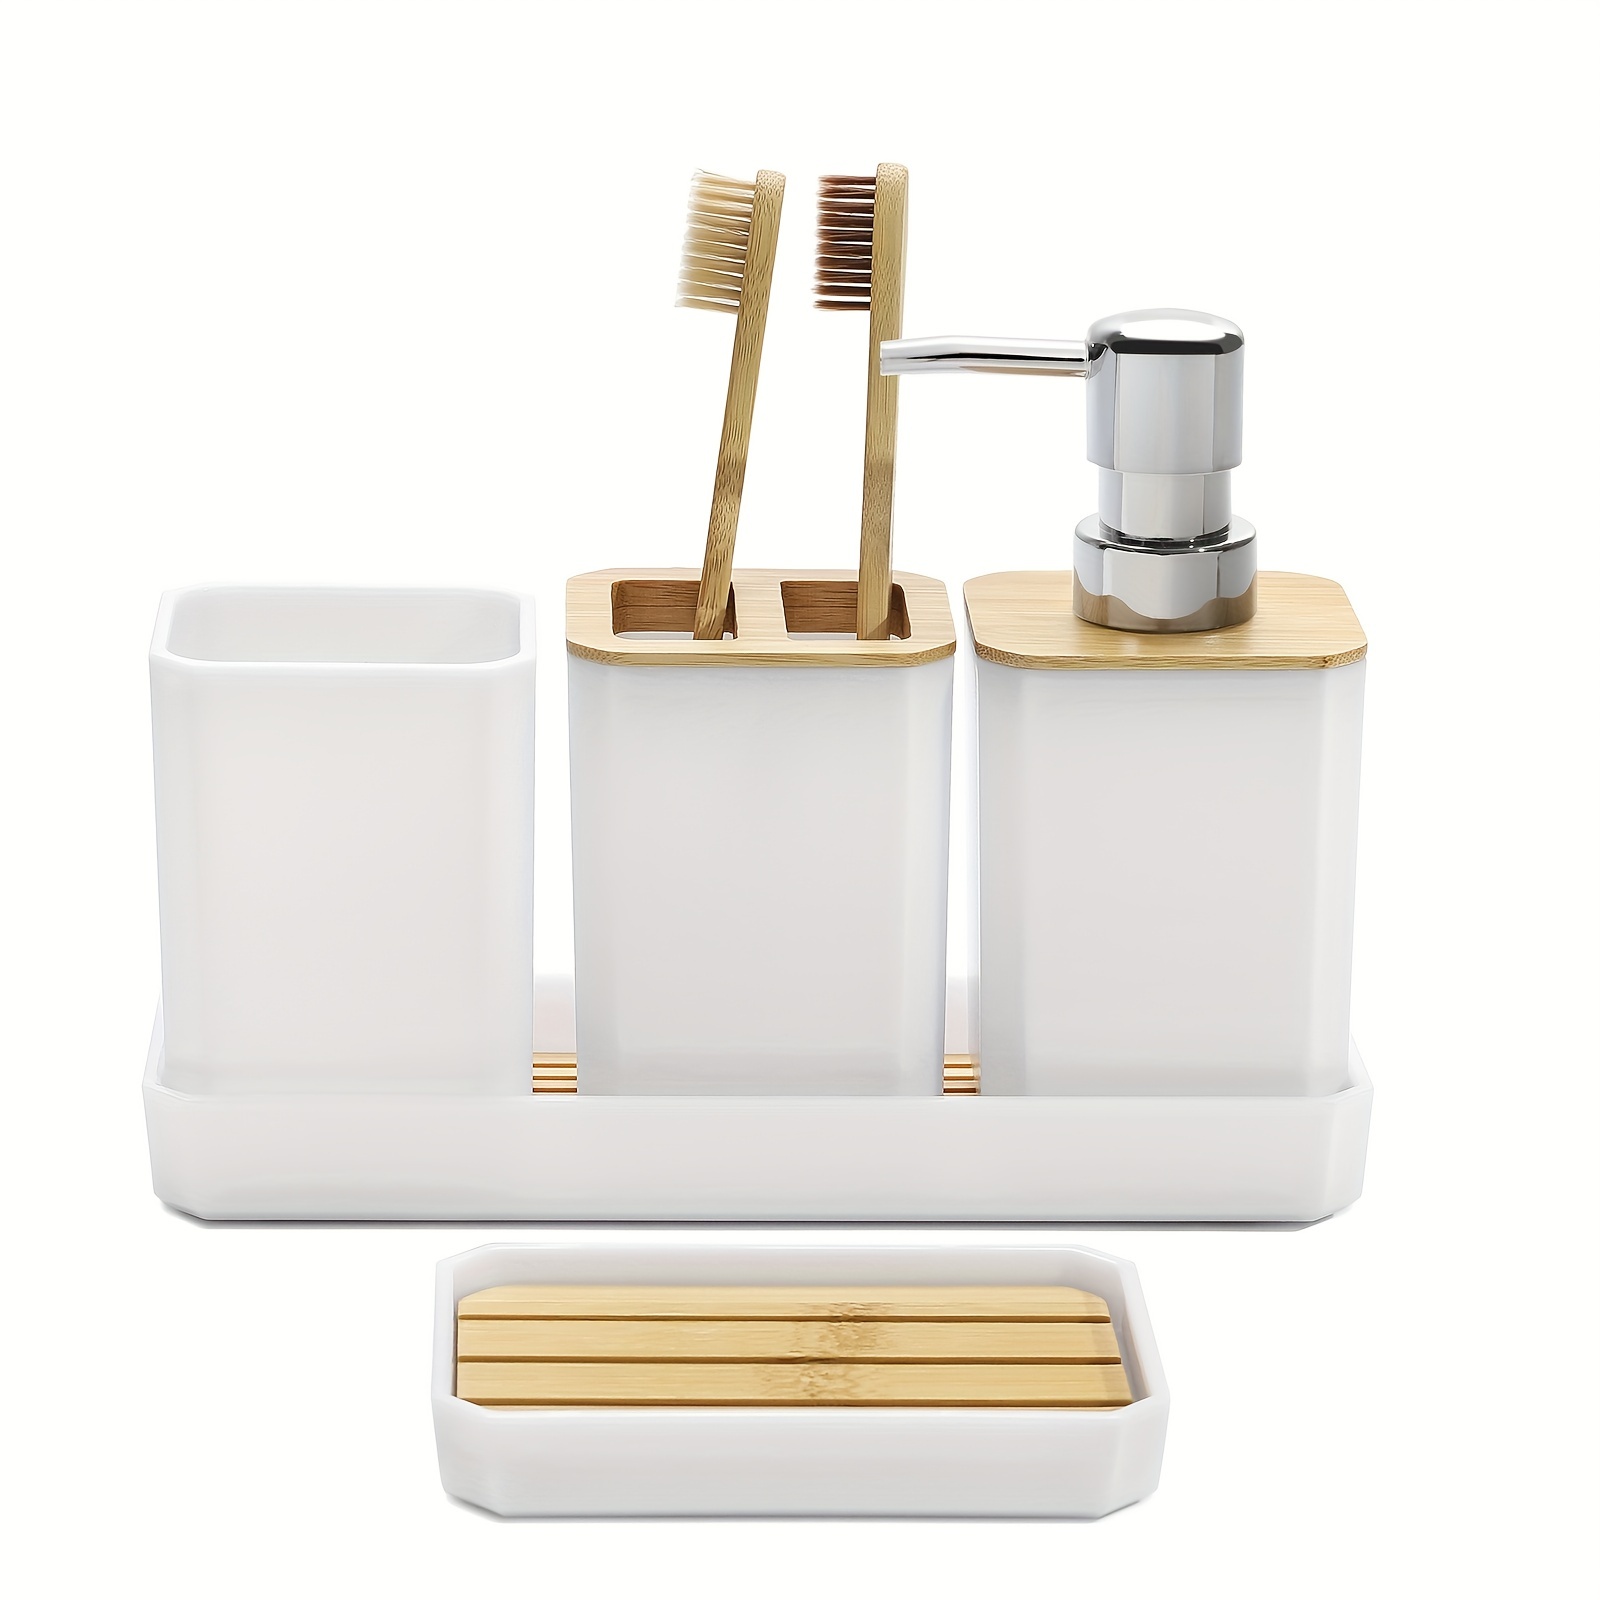  zccz Juego de 5 accesorios de baño, dispensador de jabón,  soporte para cepillo de inodoro, soporte para cepillo de dientes, vaso de  baño, jabonera, juego de accesorios de baño vintage, decoración